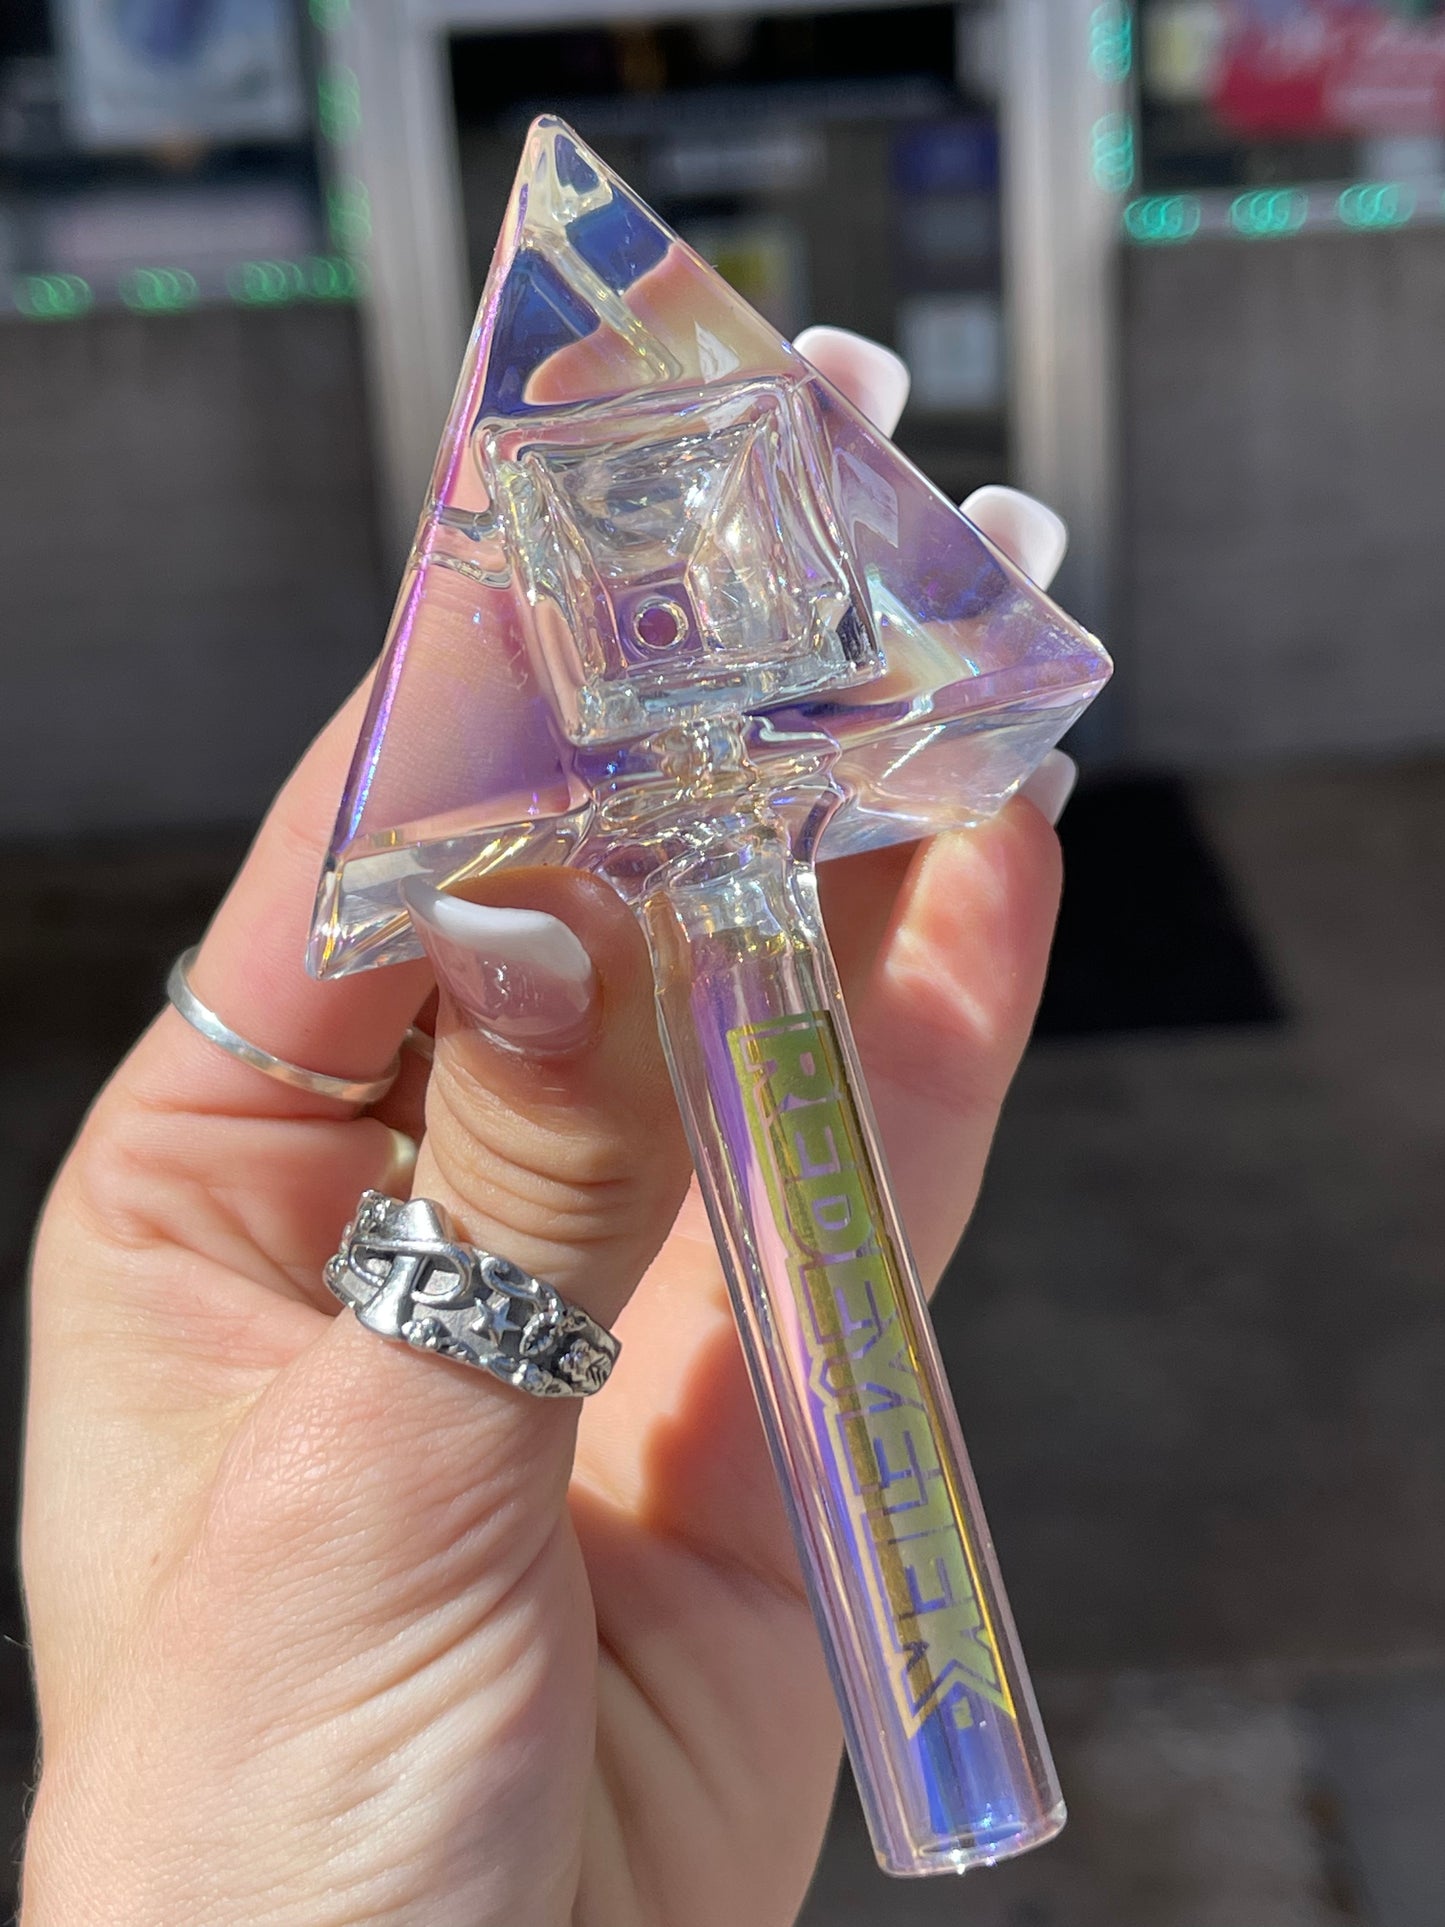 Redeye Prism Fumed Glass Handpipe